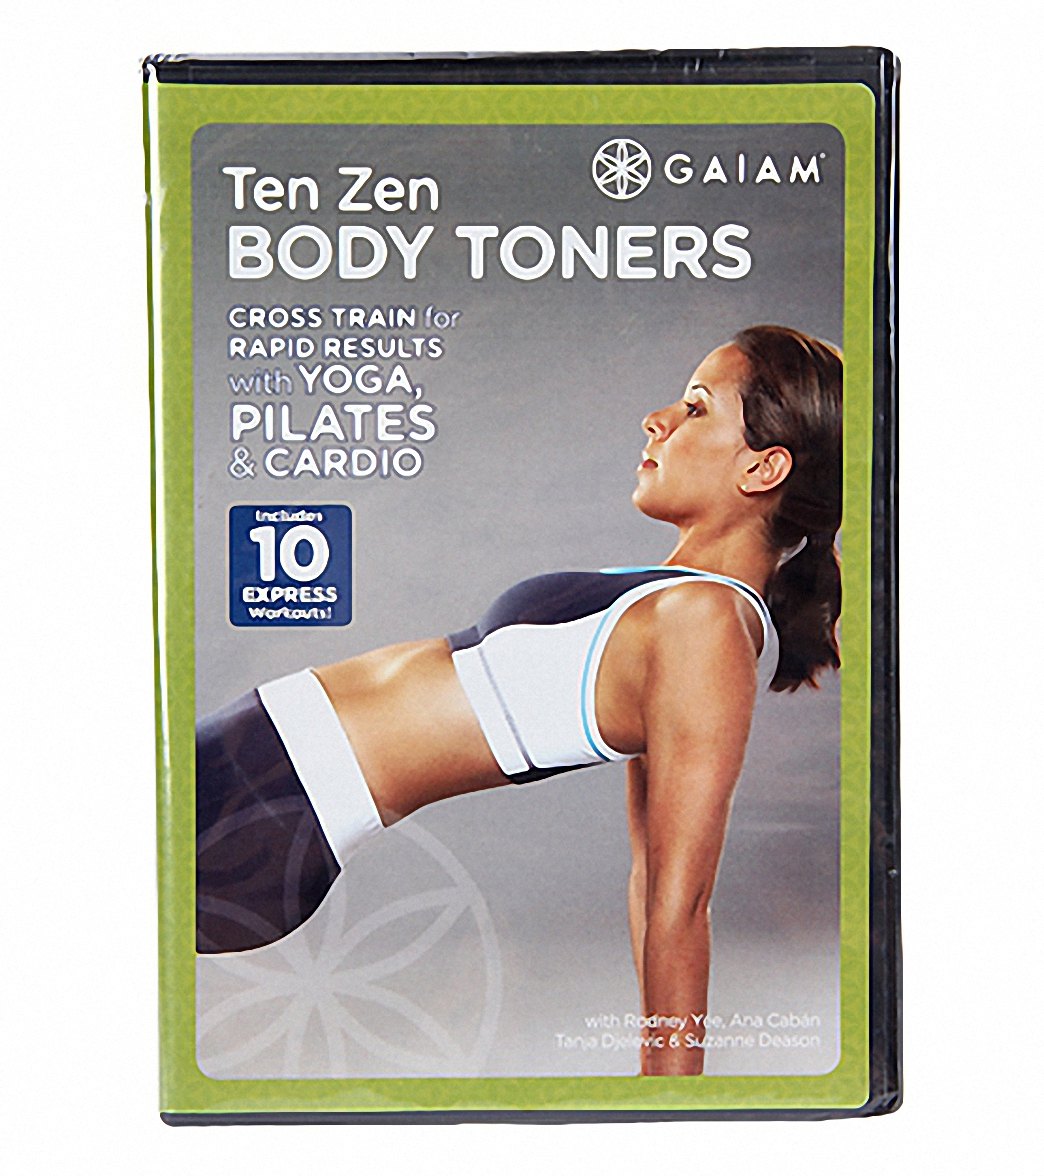 Gaiam Ten Zen Body Toners DVD